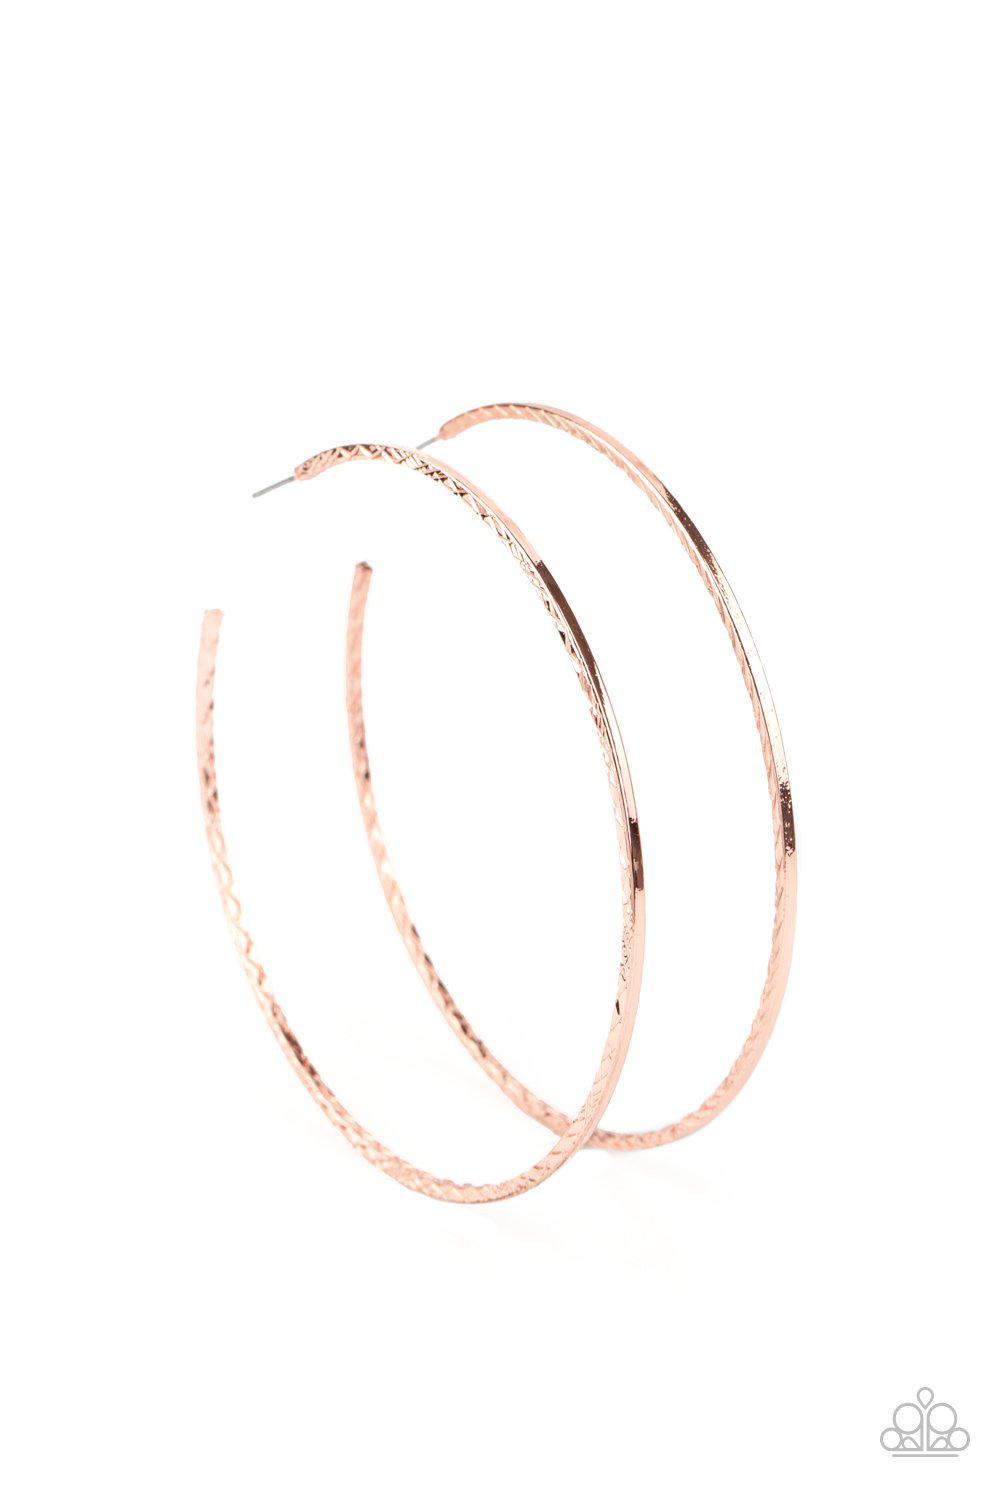 Diamondback Diva Copper Hoop Earrings - Paparazzi Accessories - lightbox -CarasShop.com - $5 Jewelry by Cara Jewels